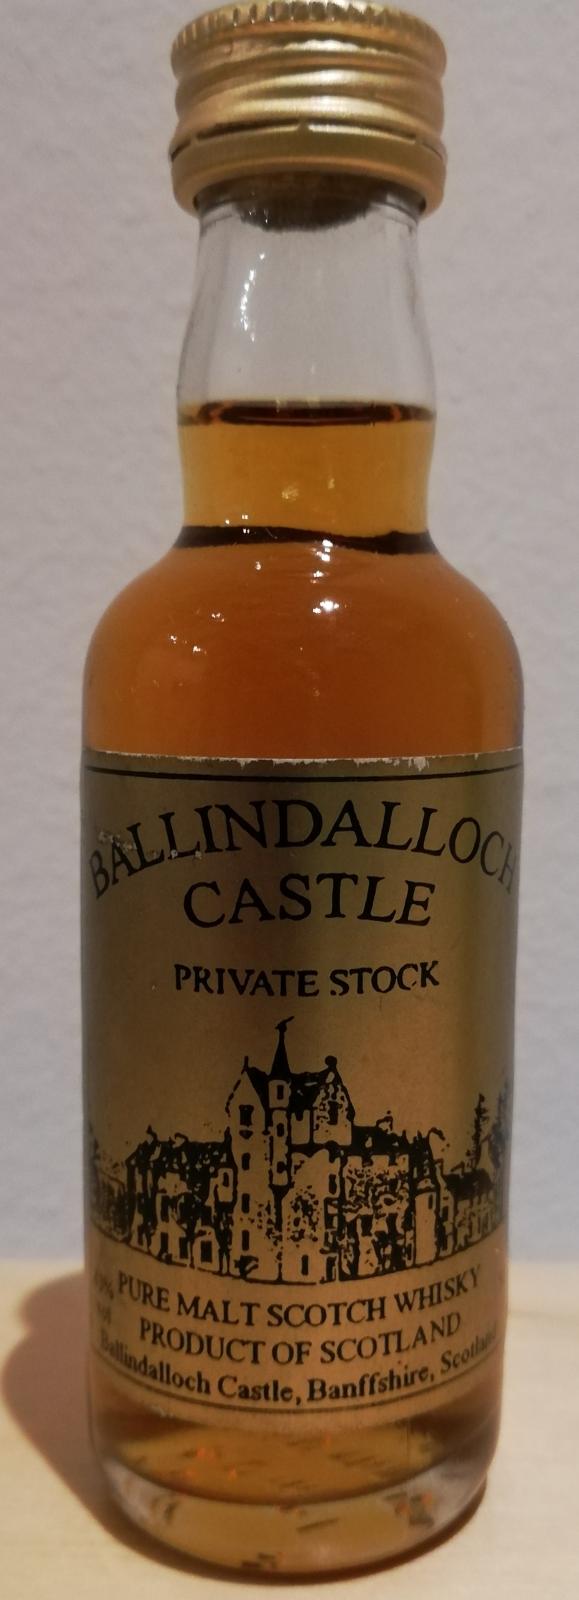 Ballindalloch Castle Pure Malt Scotch Whisky